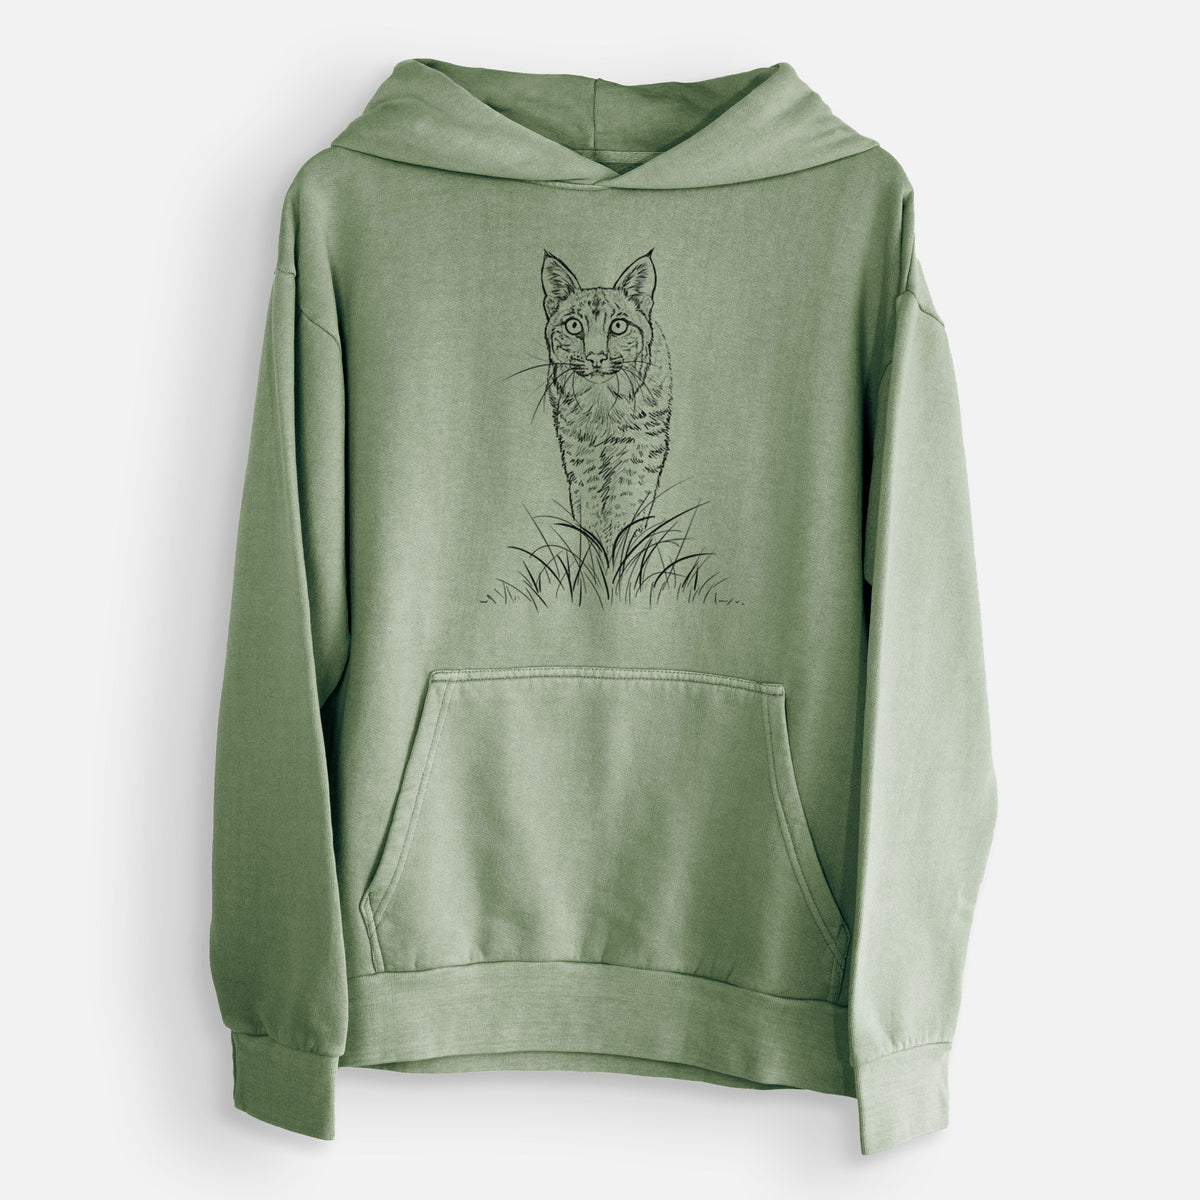 Bobcat - Lynx rufus  - Urban Heavyweight Hoodie